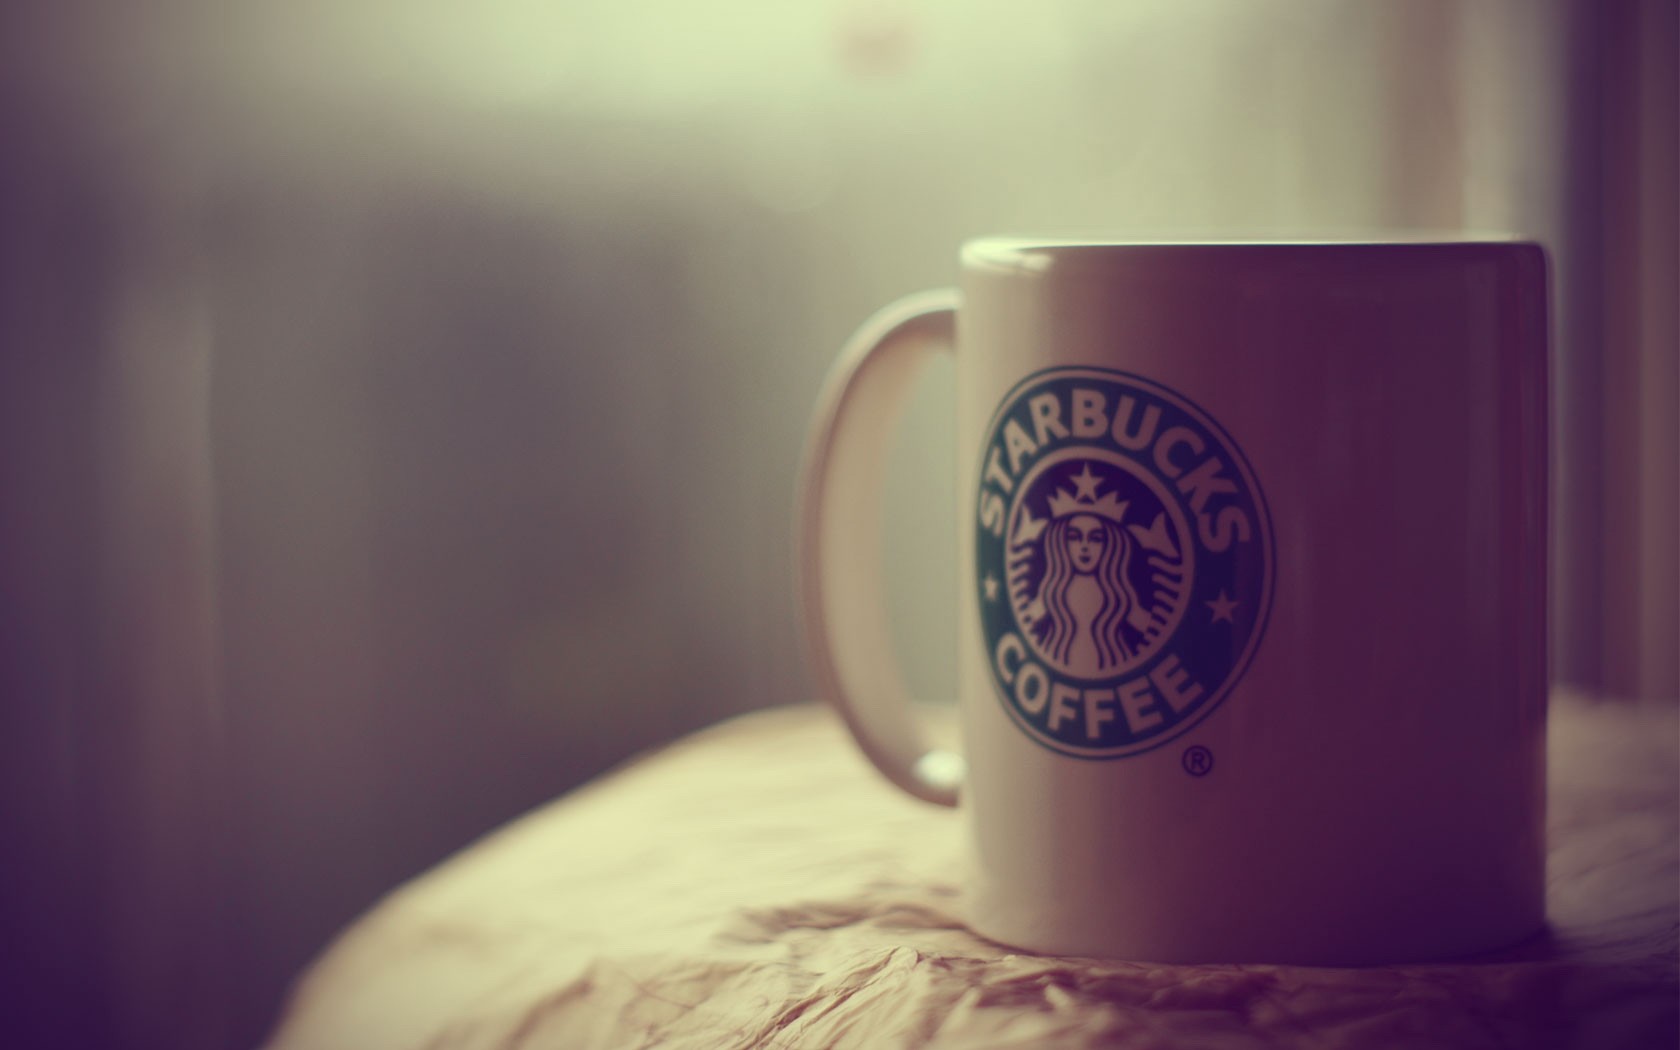 General 1680x1050 Starbucks cup mug logo indoors brand